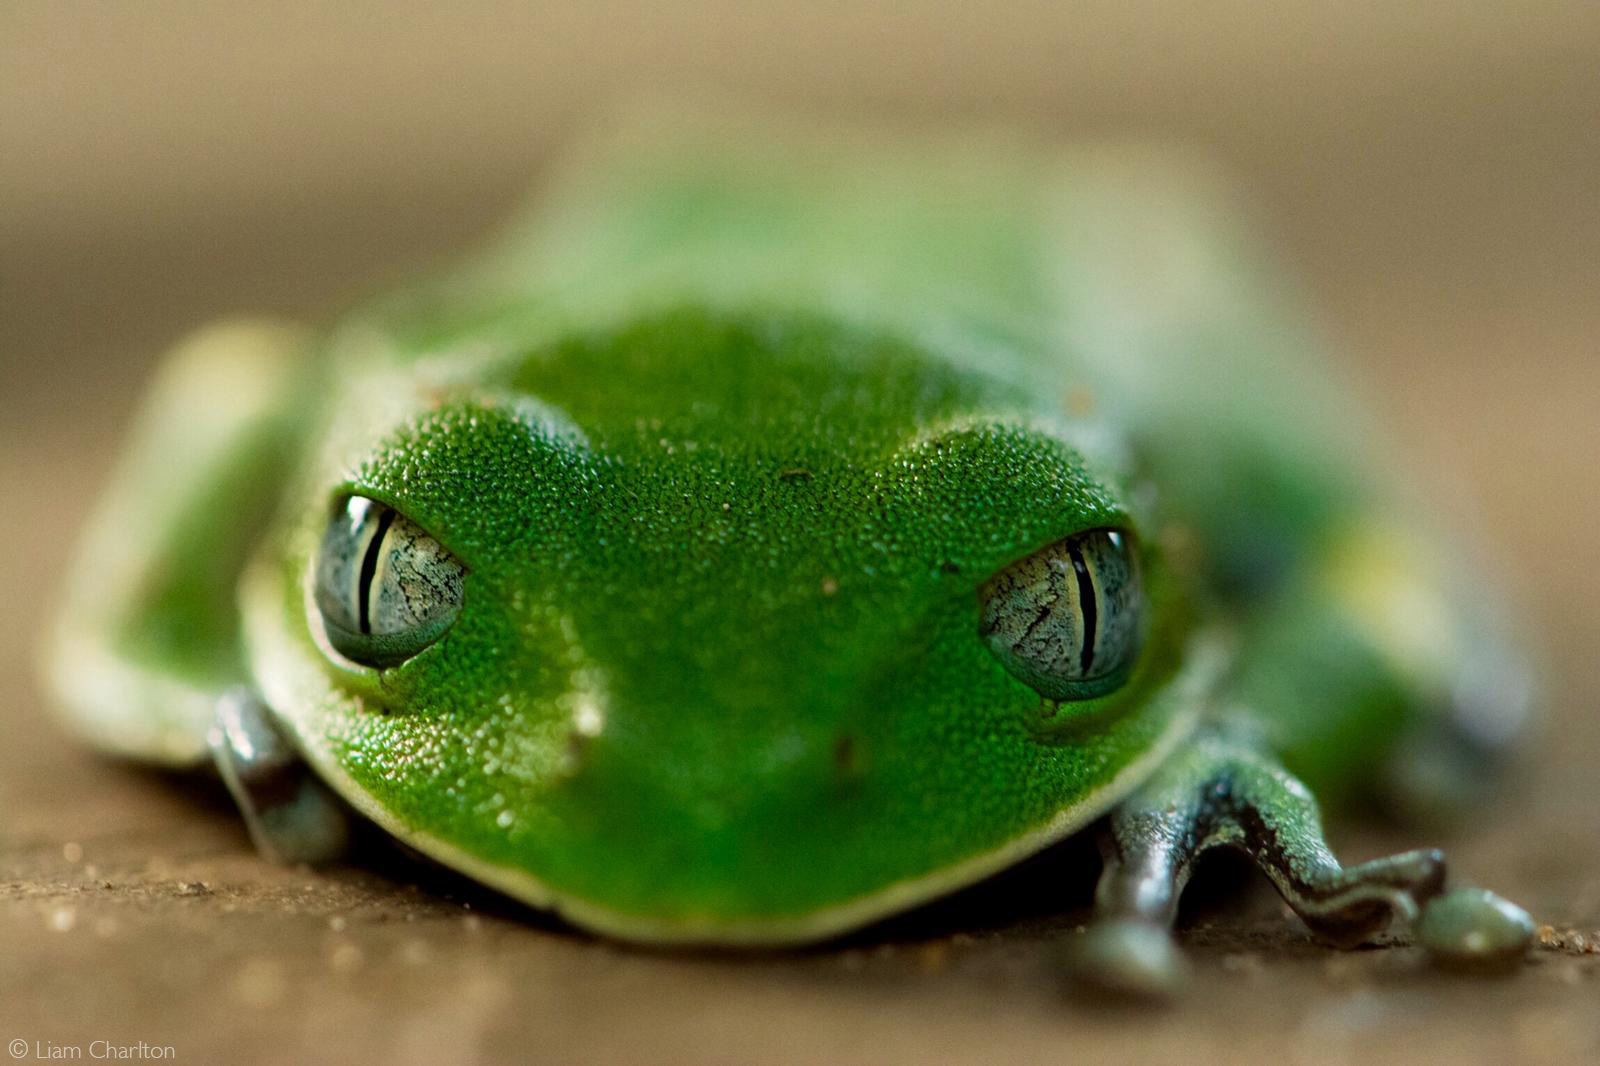 Up close of a green tree frog. Odzala-Kokoua National Park, Republic of Congo © Liam Charlton